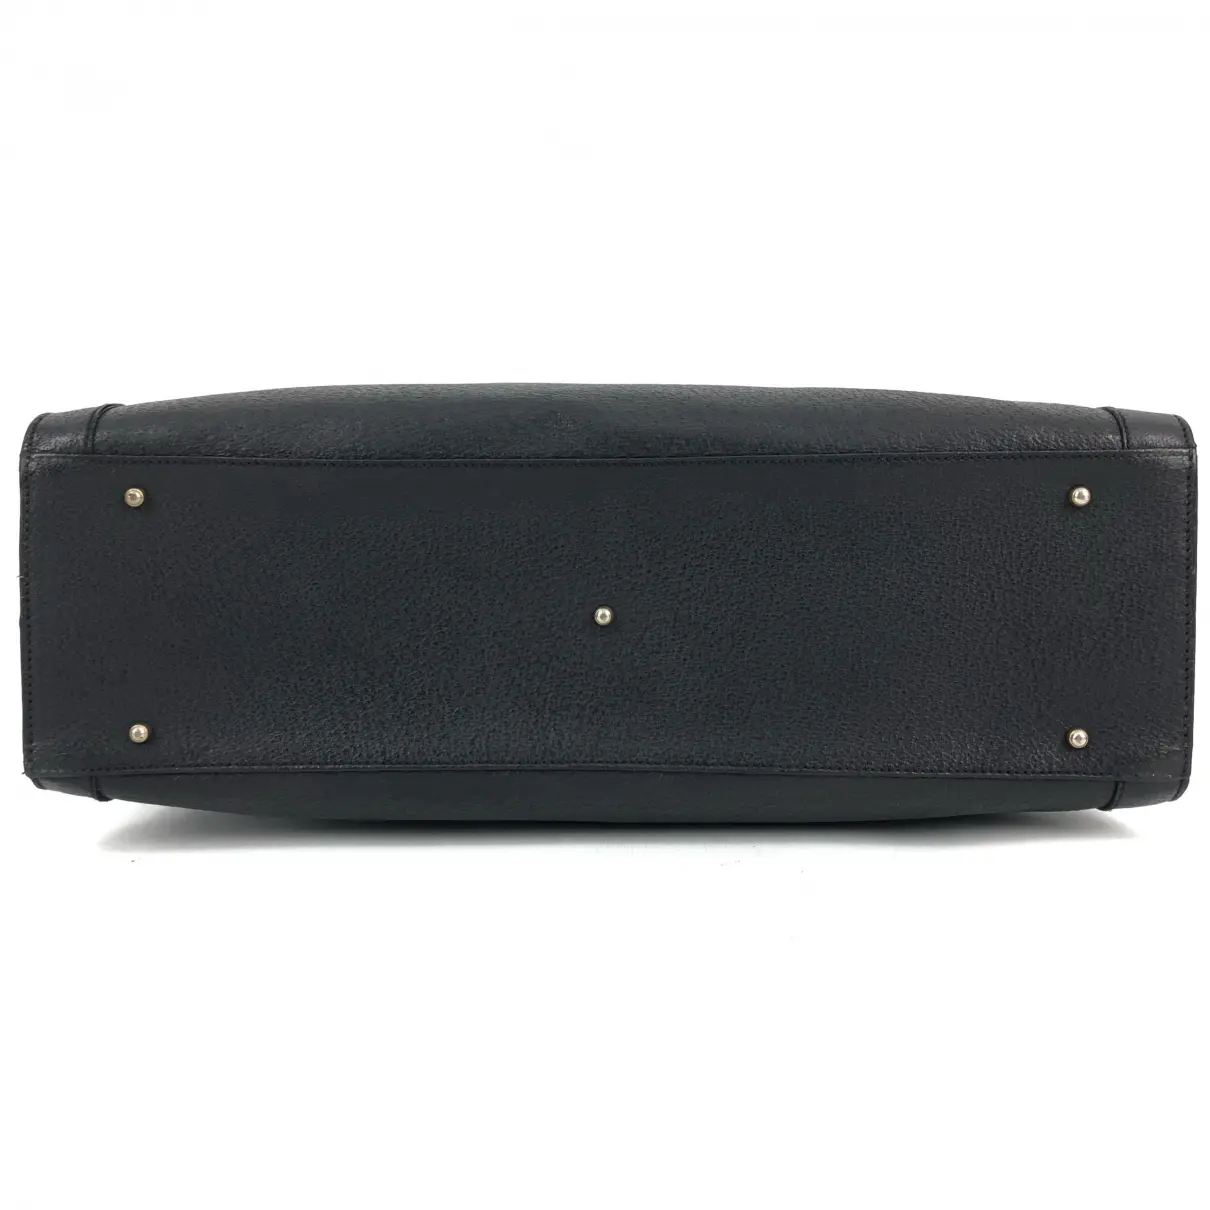 Diana Bamboo leather handbag Gucci